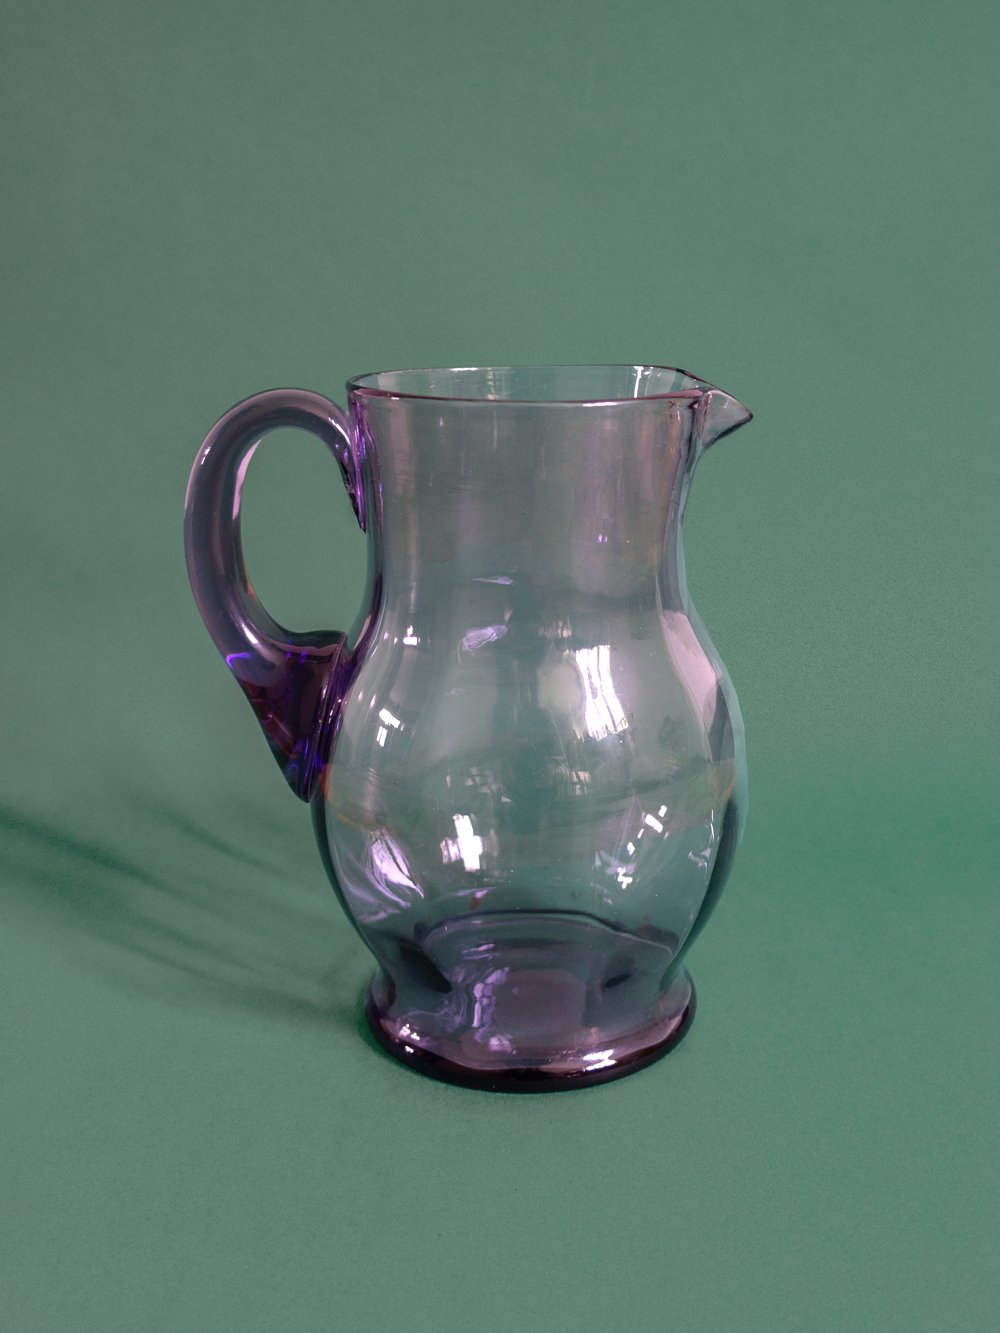 Image of purple pitcher